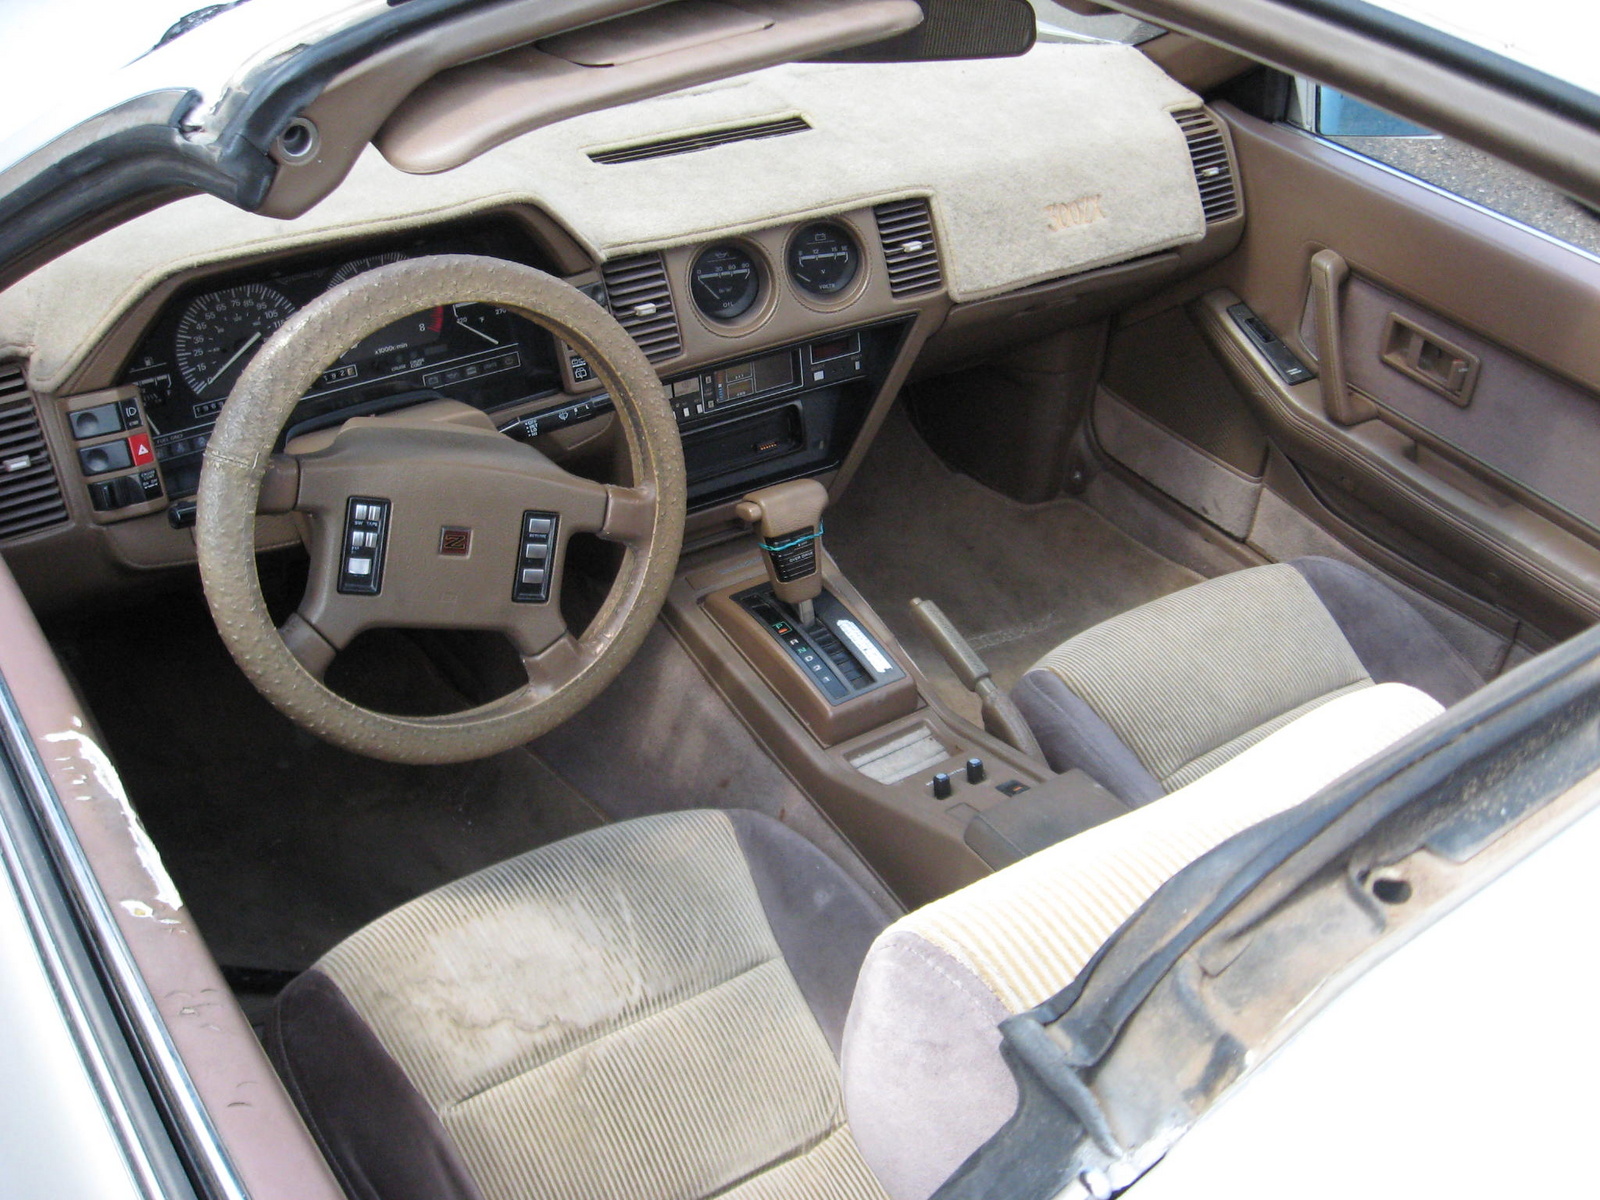 1988 Nissan 300zx interior pics